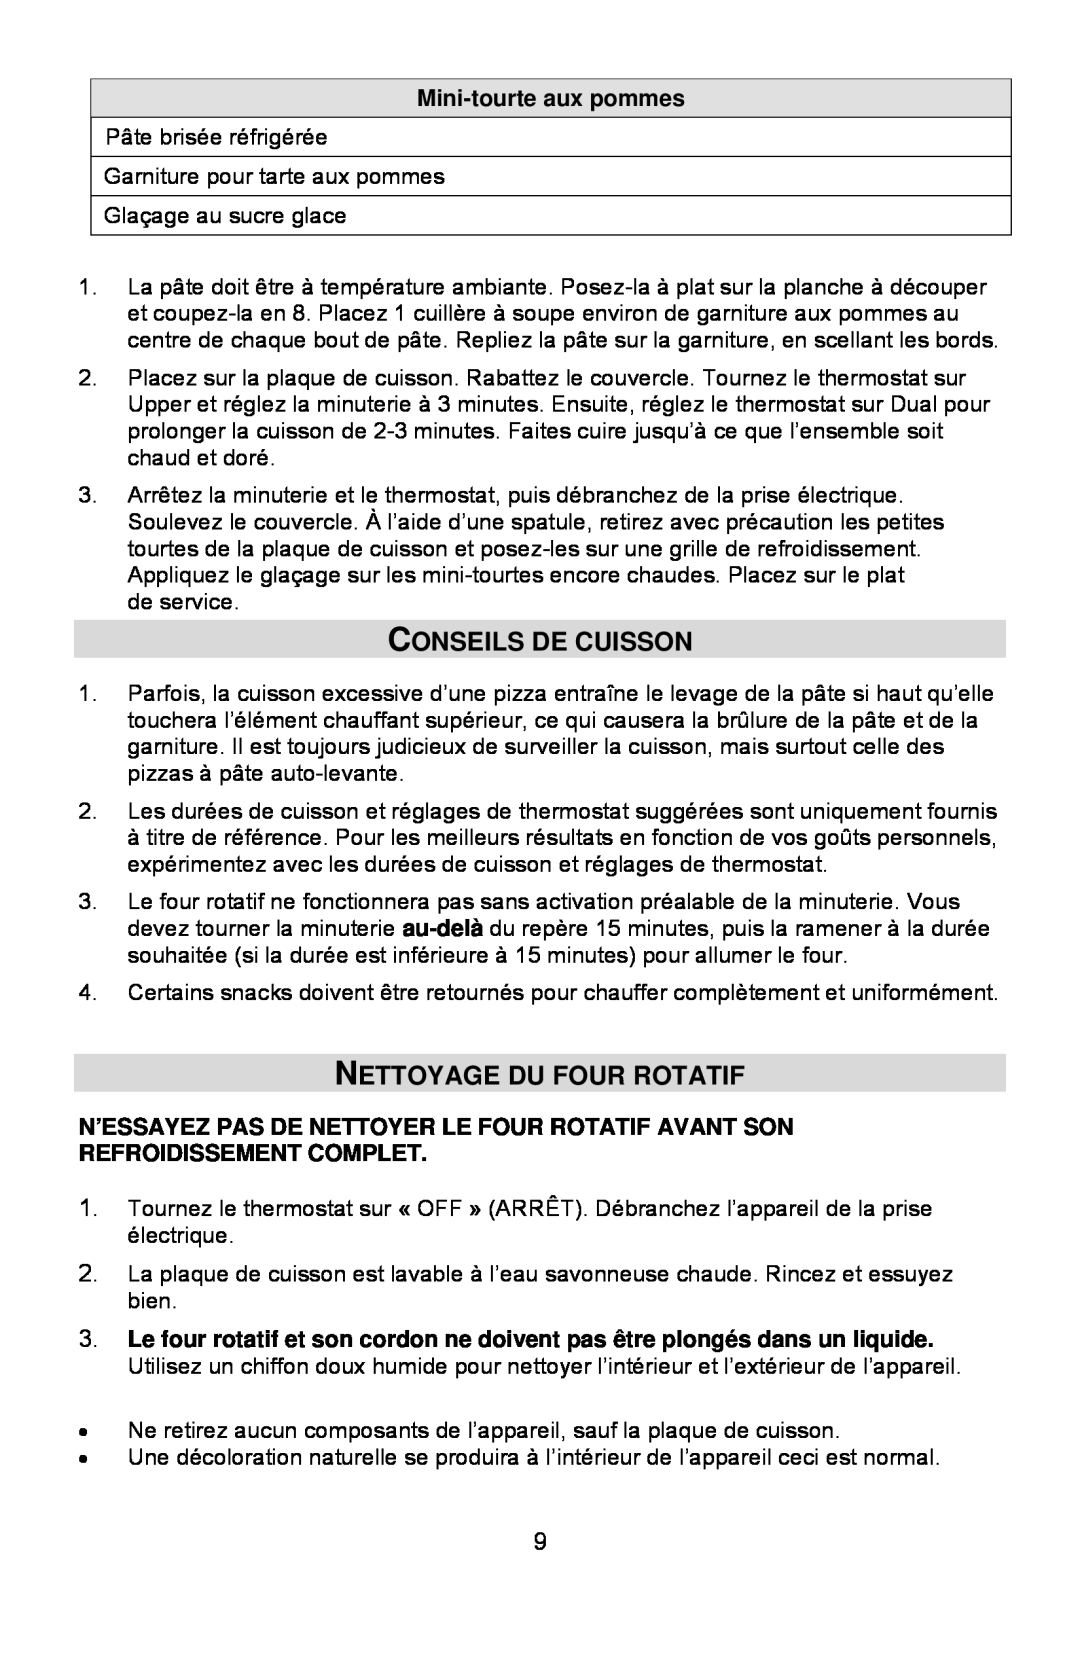 West Bend Rotary Oven instruction manual Conseils De Cuisson, Nettoyage Du Four Rotatif 